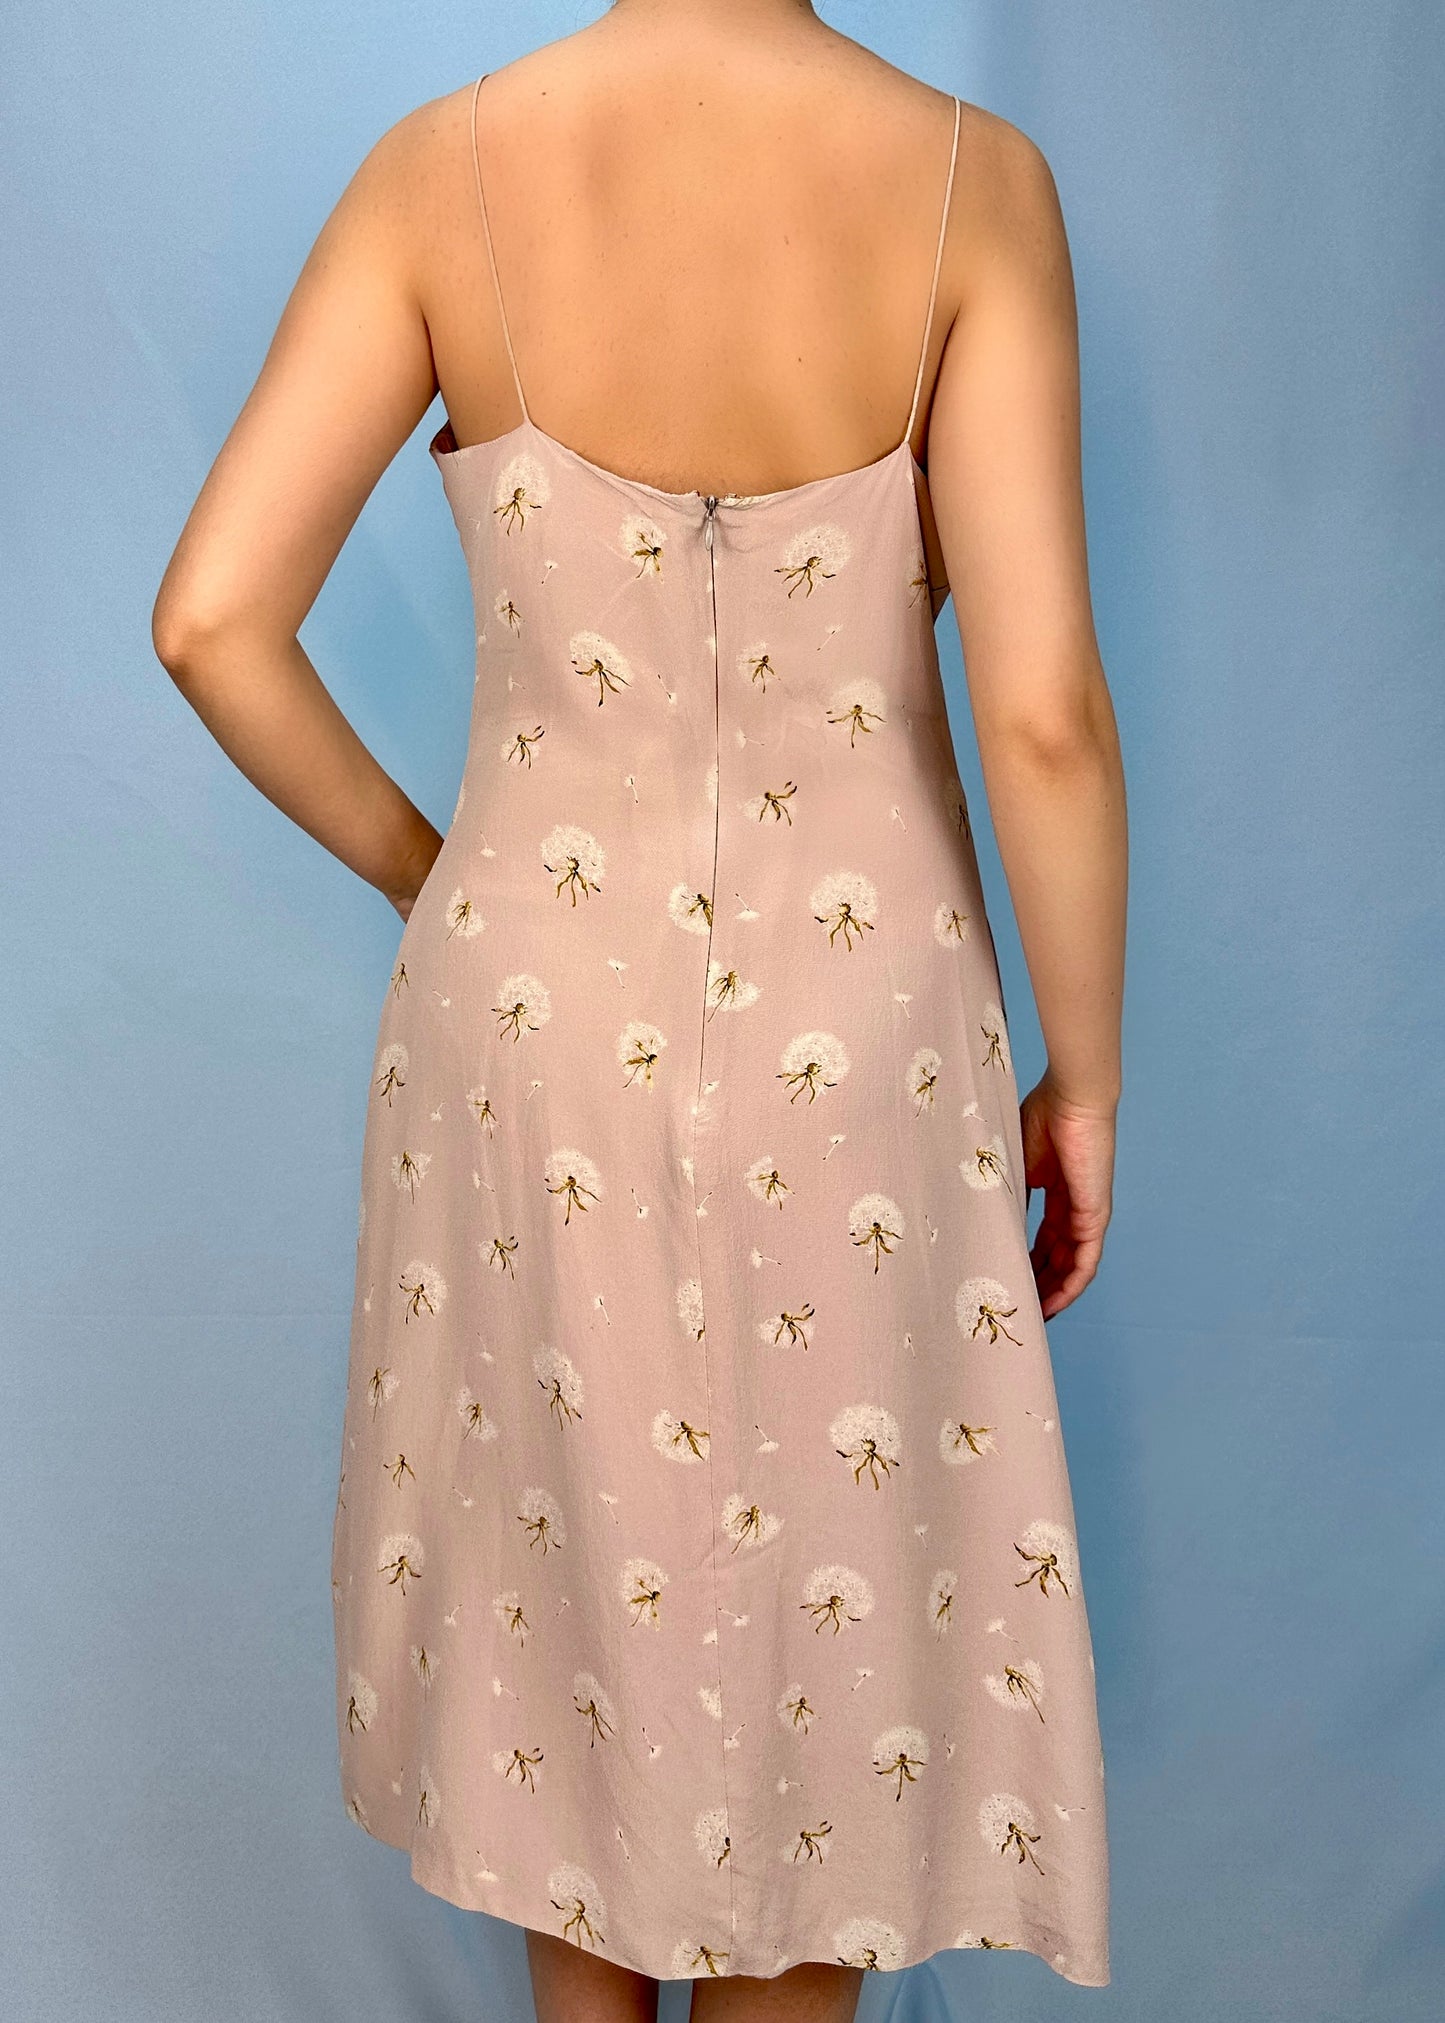 Chloé Spring 1998 Dandelion Print Silk & Lace Pink Dress